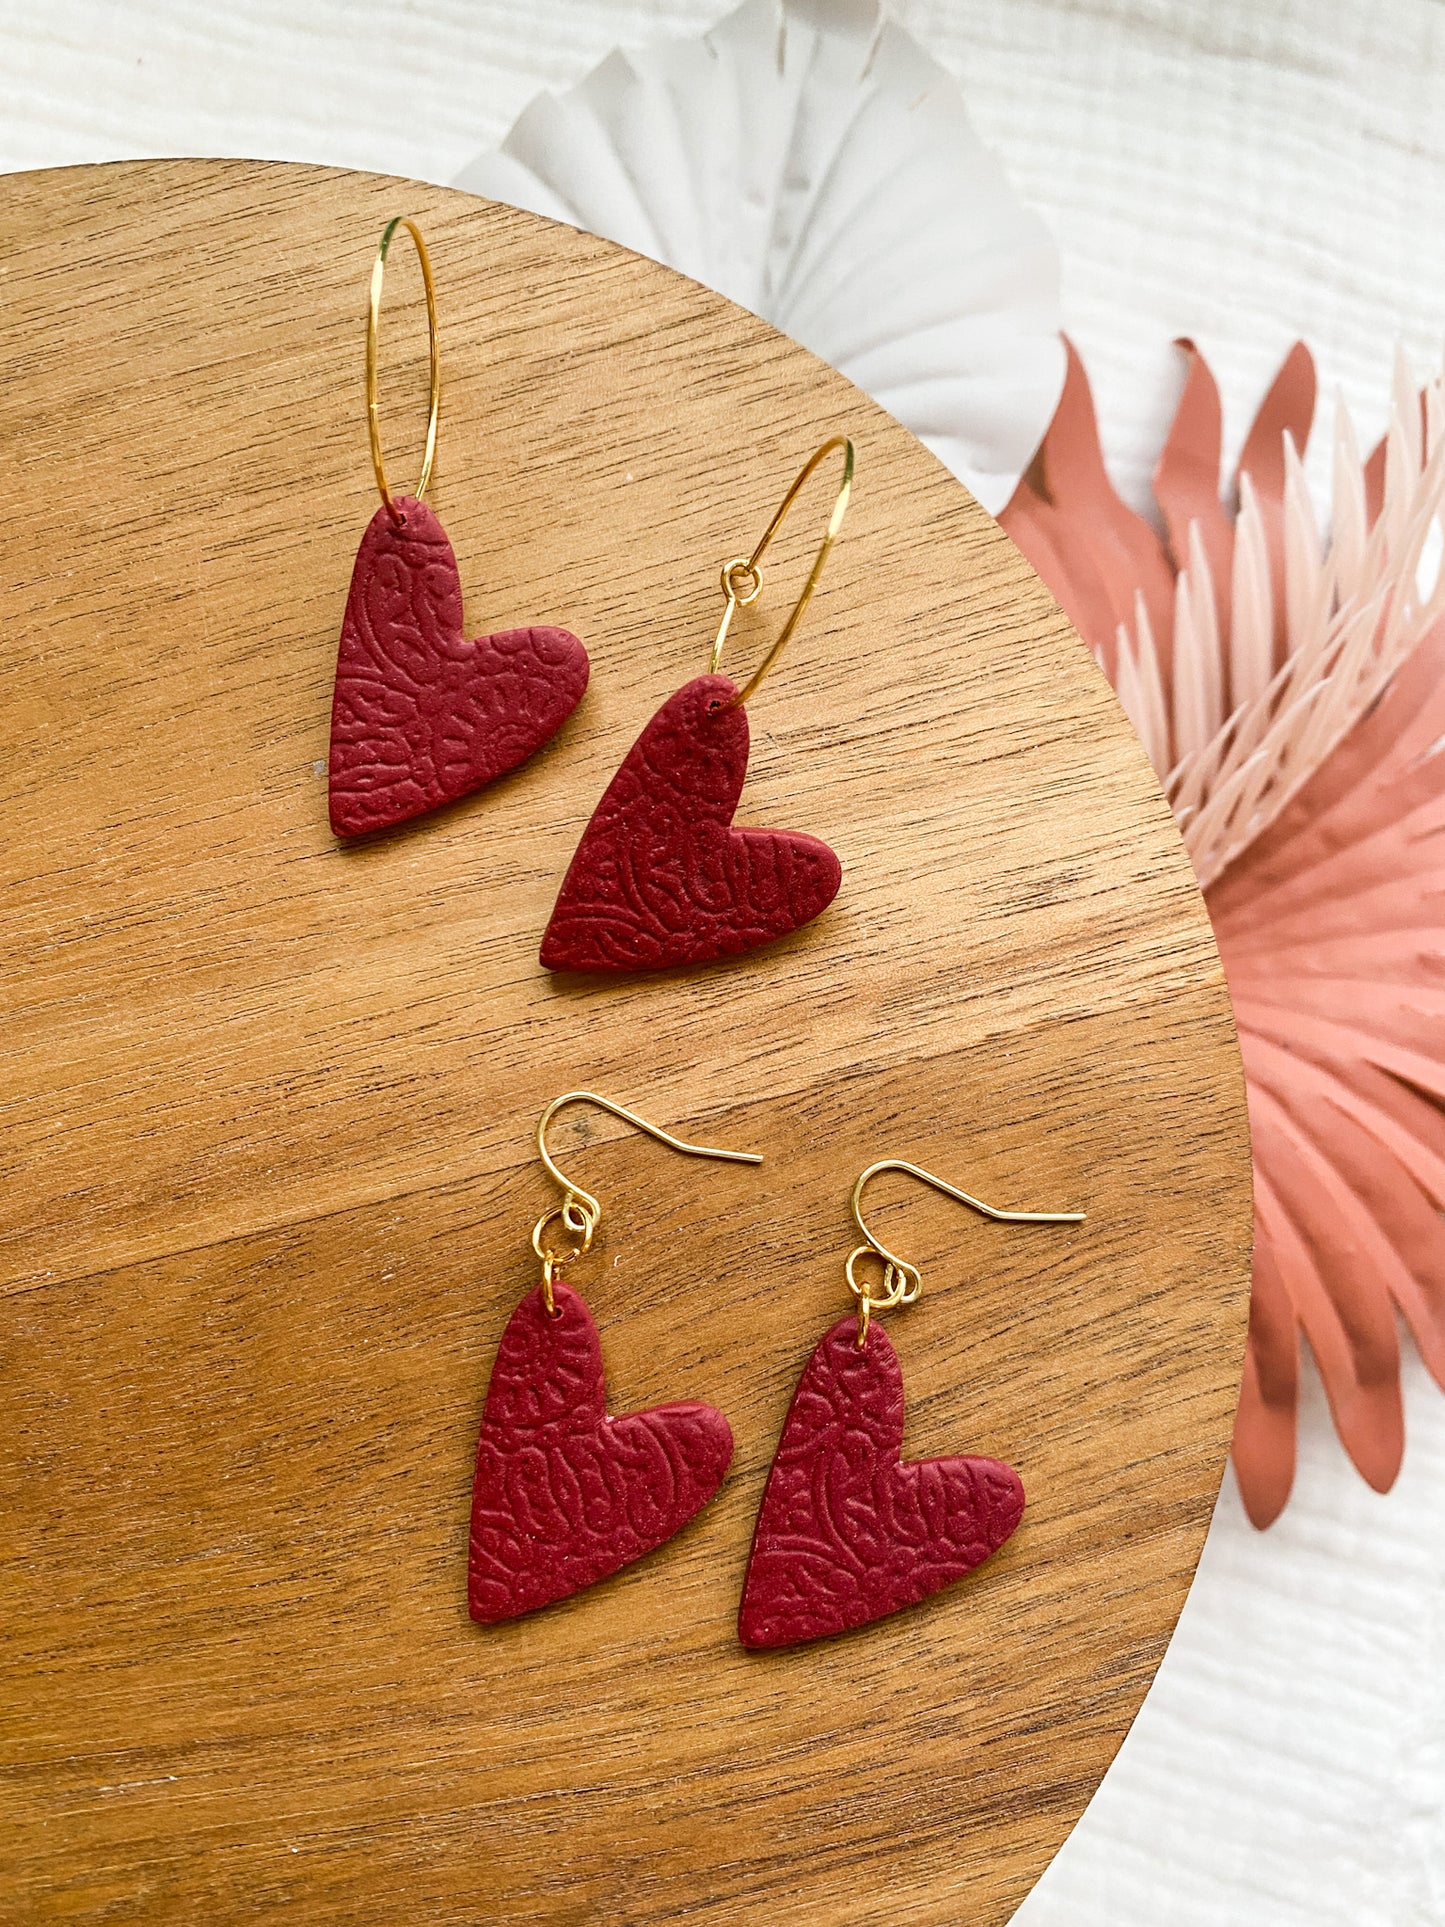 Textured Red Heart Earrings | Valentine's Day Earrings | Clay Earrings  | Lightweight